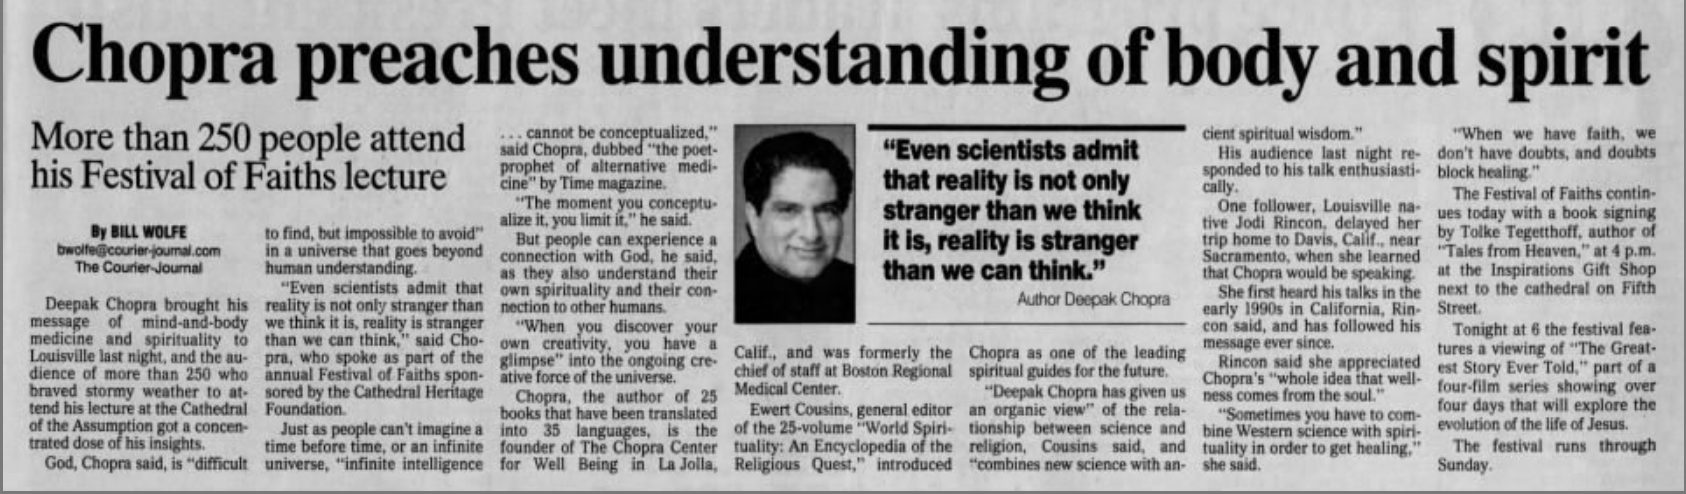 Wolfe, Bill. “Chopra Preaches Understanding of Body and Spirit.” The Courier-Journal, 11 Nov. 2002, p. 9.